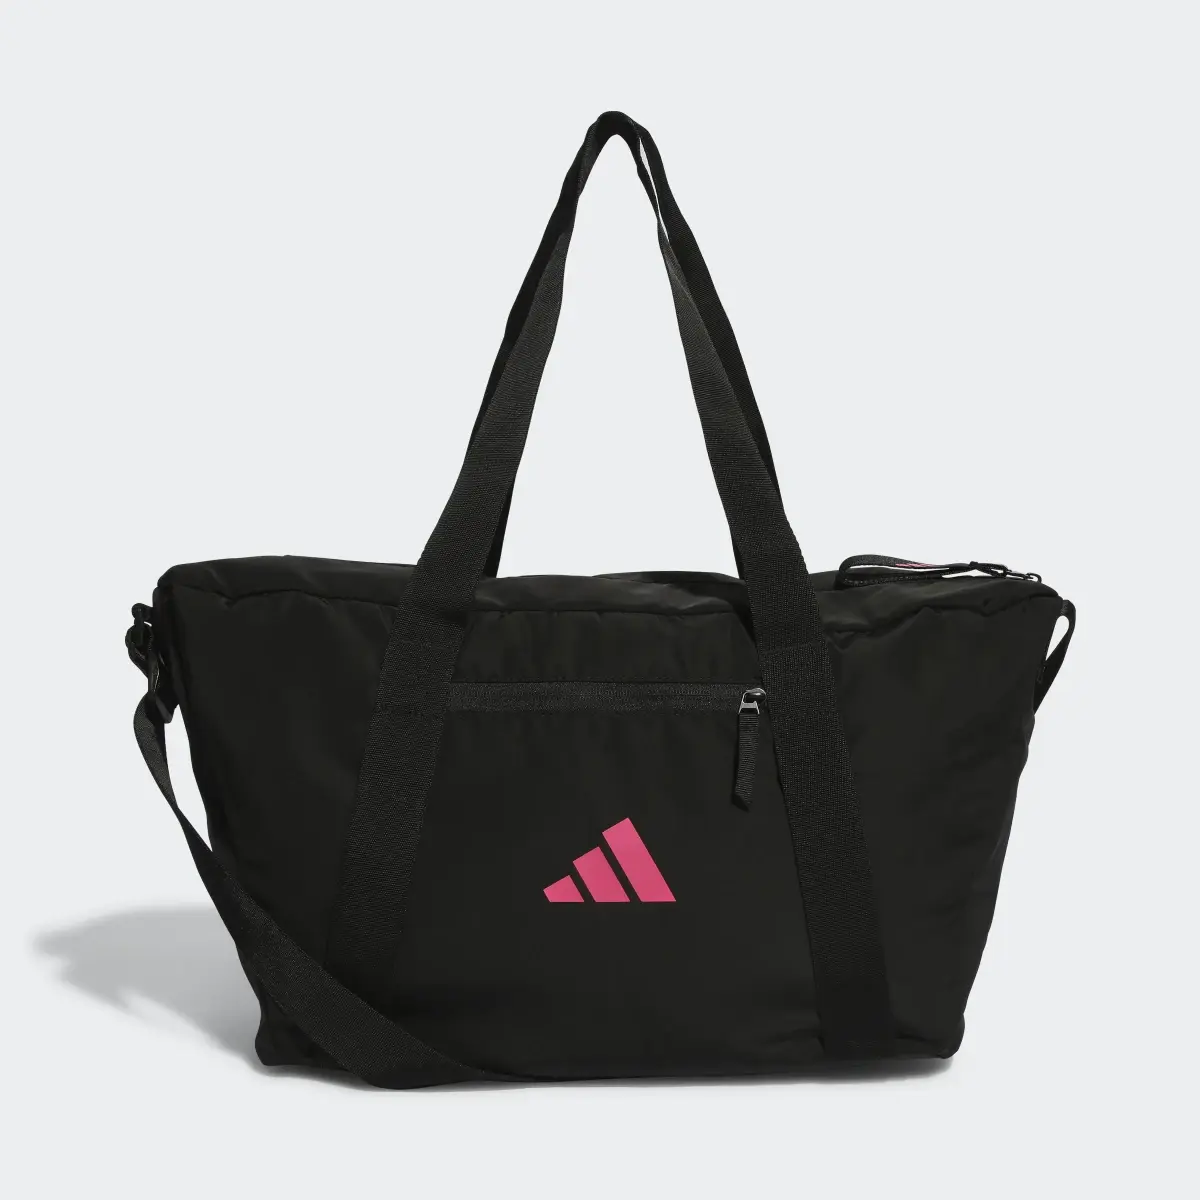 Adidas Sport Bag. 2